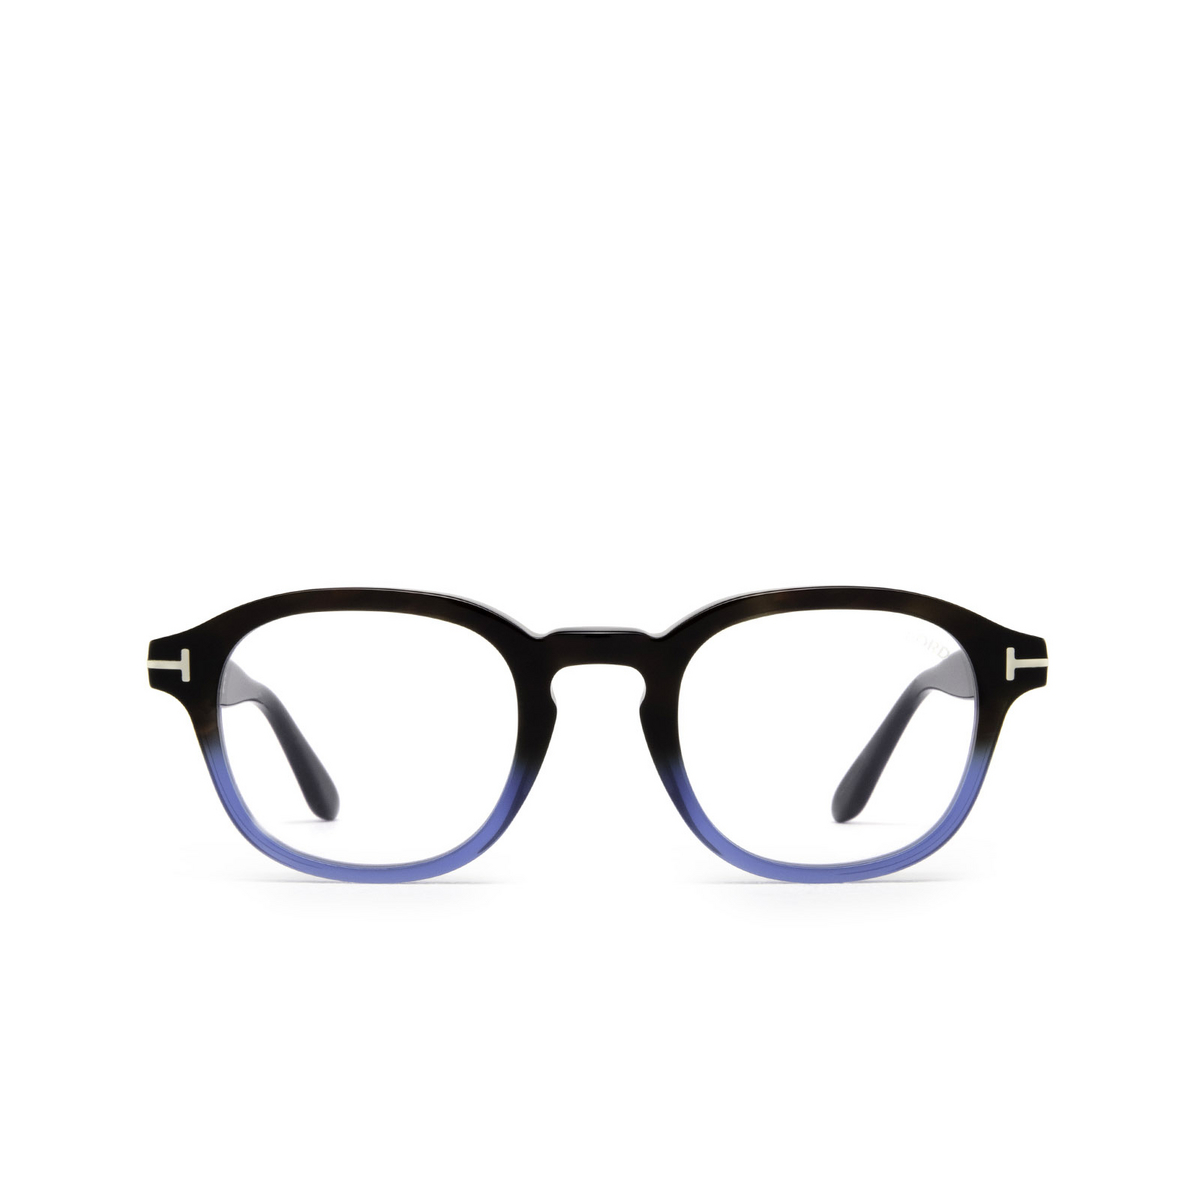 Tom Ford® Round Eyeglasses: FT5698-B color 055 Black & Blue - front view